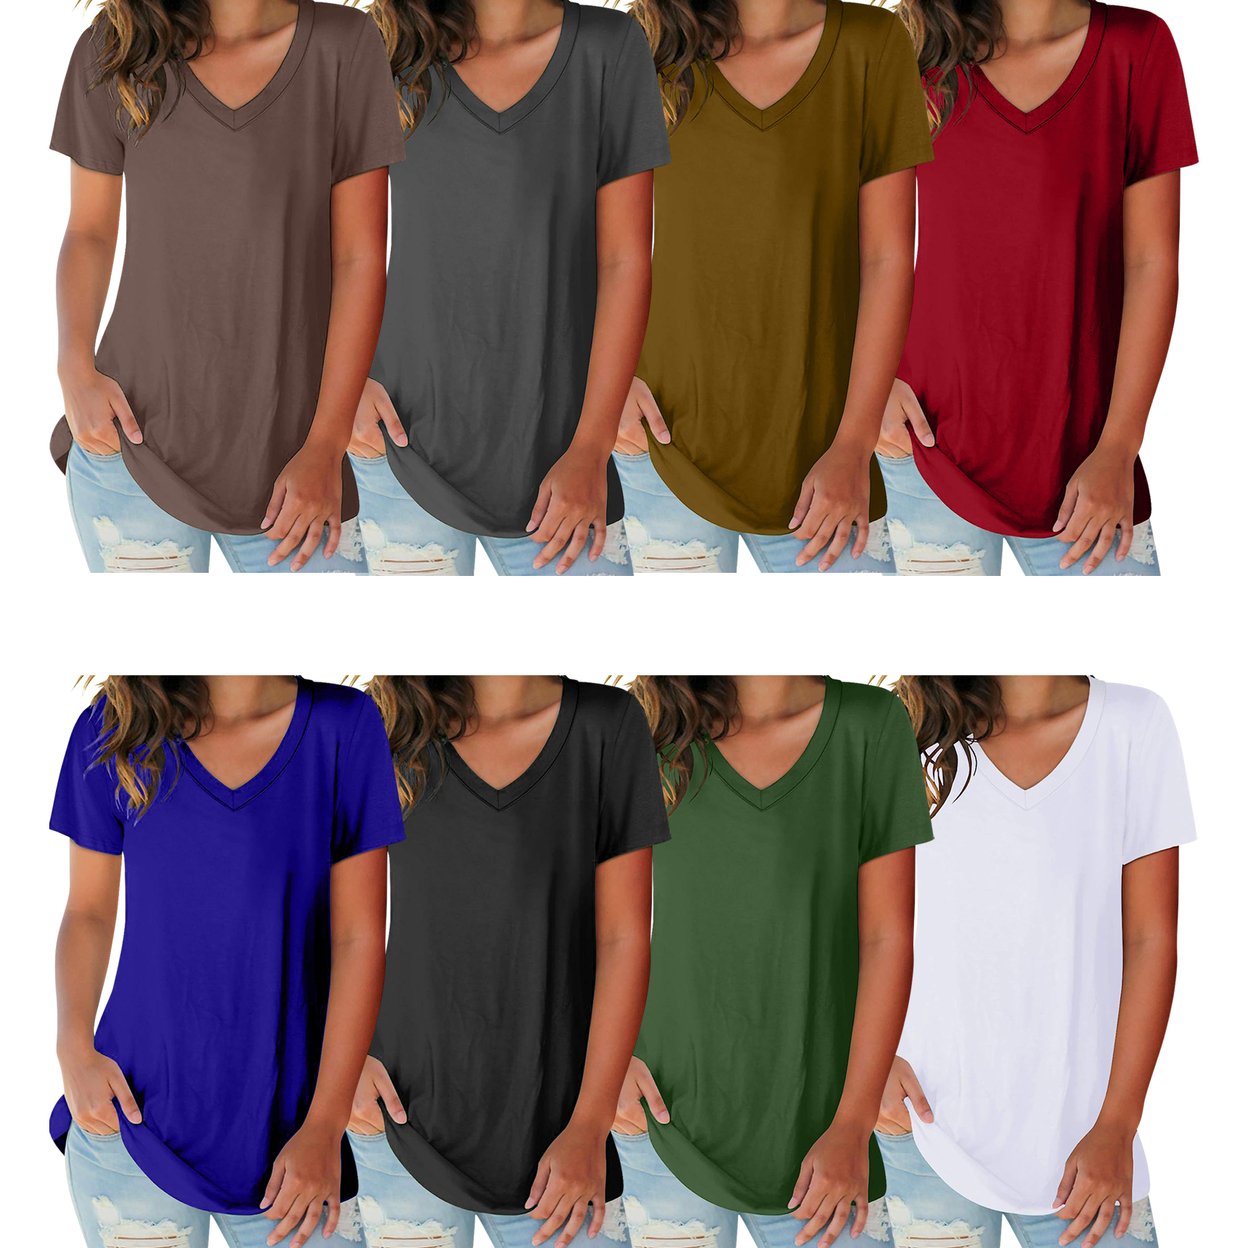 3-Pack: Women's Ultra Soft Smooth Cotton Blend Basic V-Neck Short Sleeve Shirts - Black, White Mustard, Large